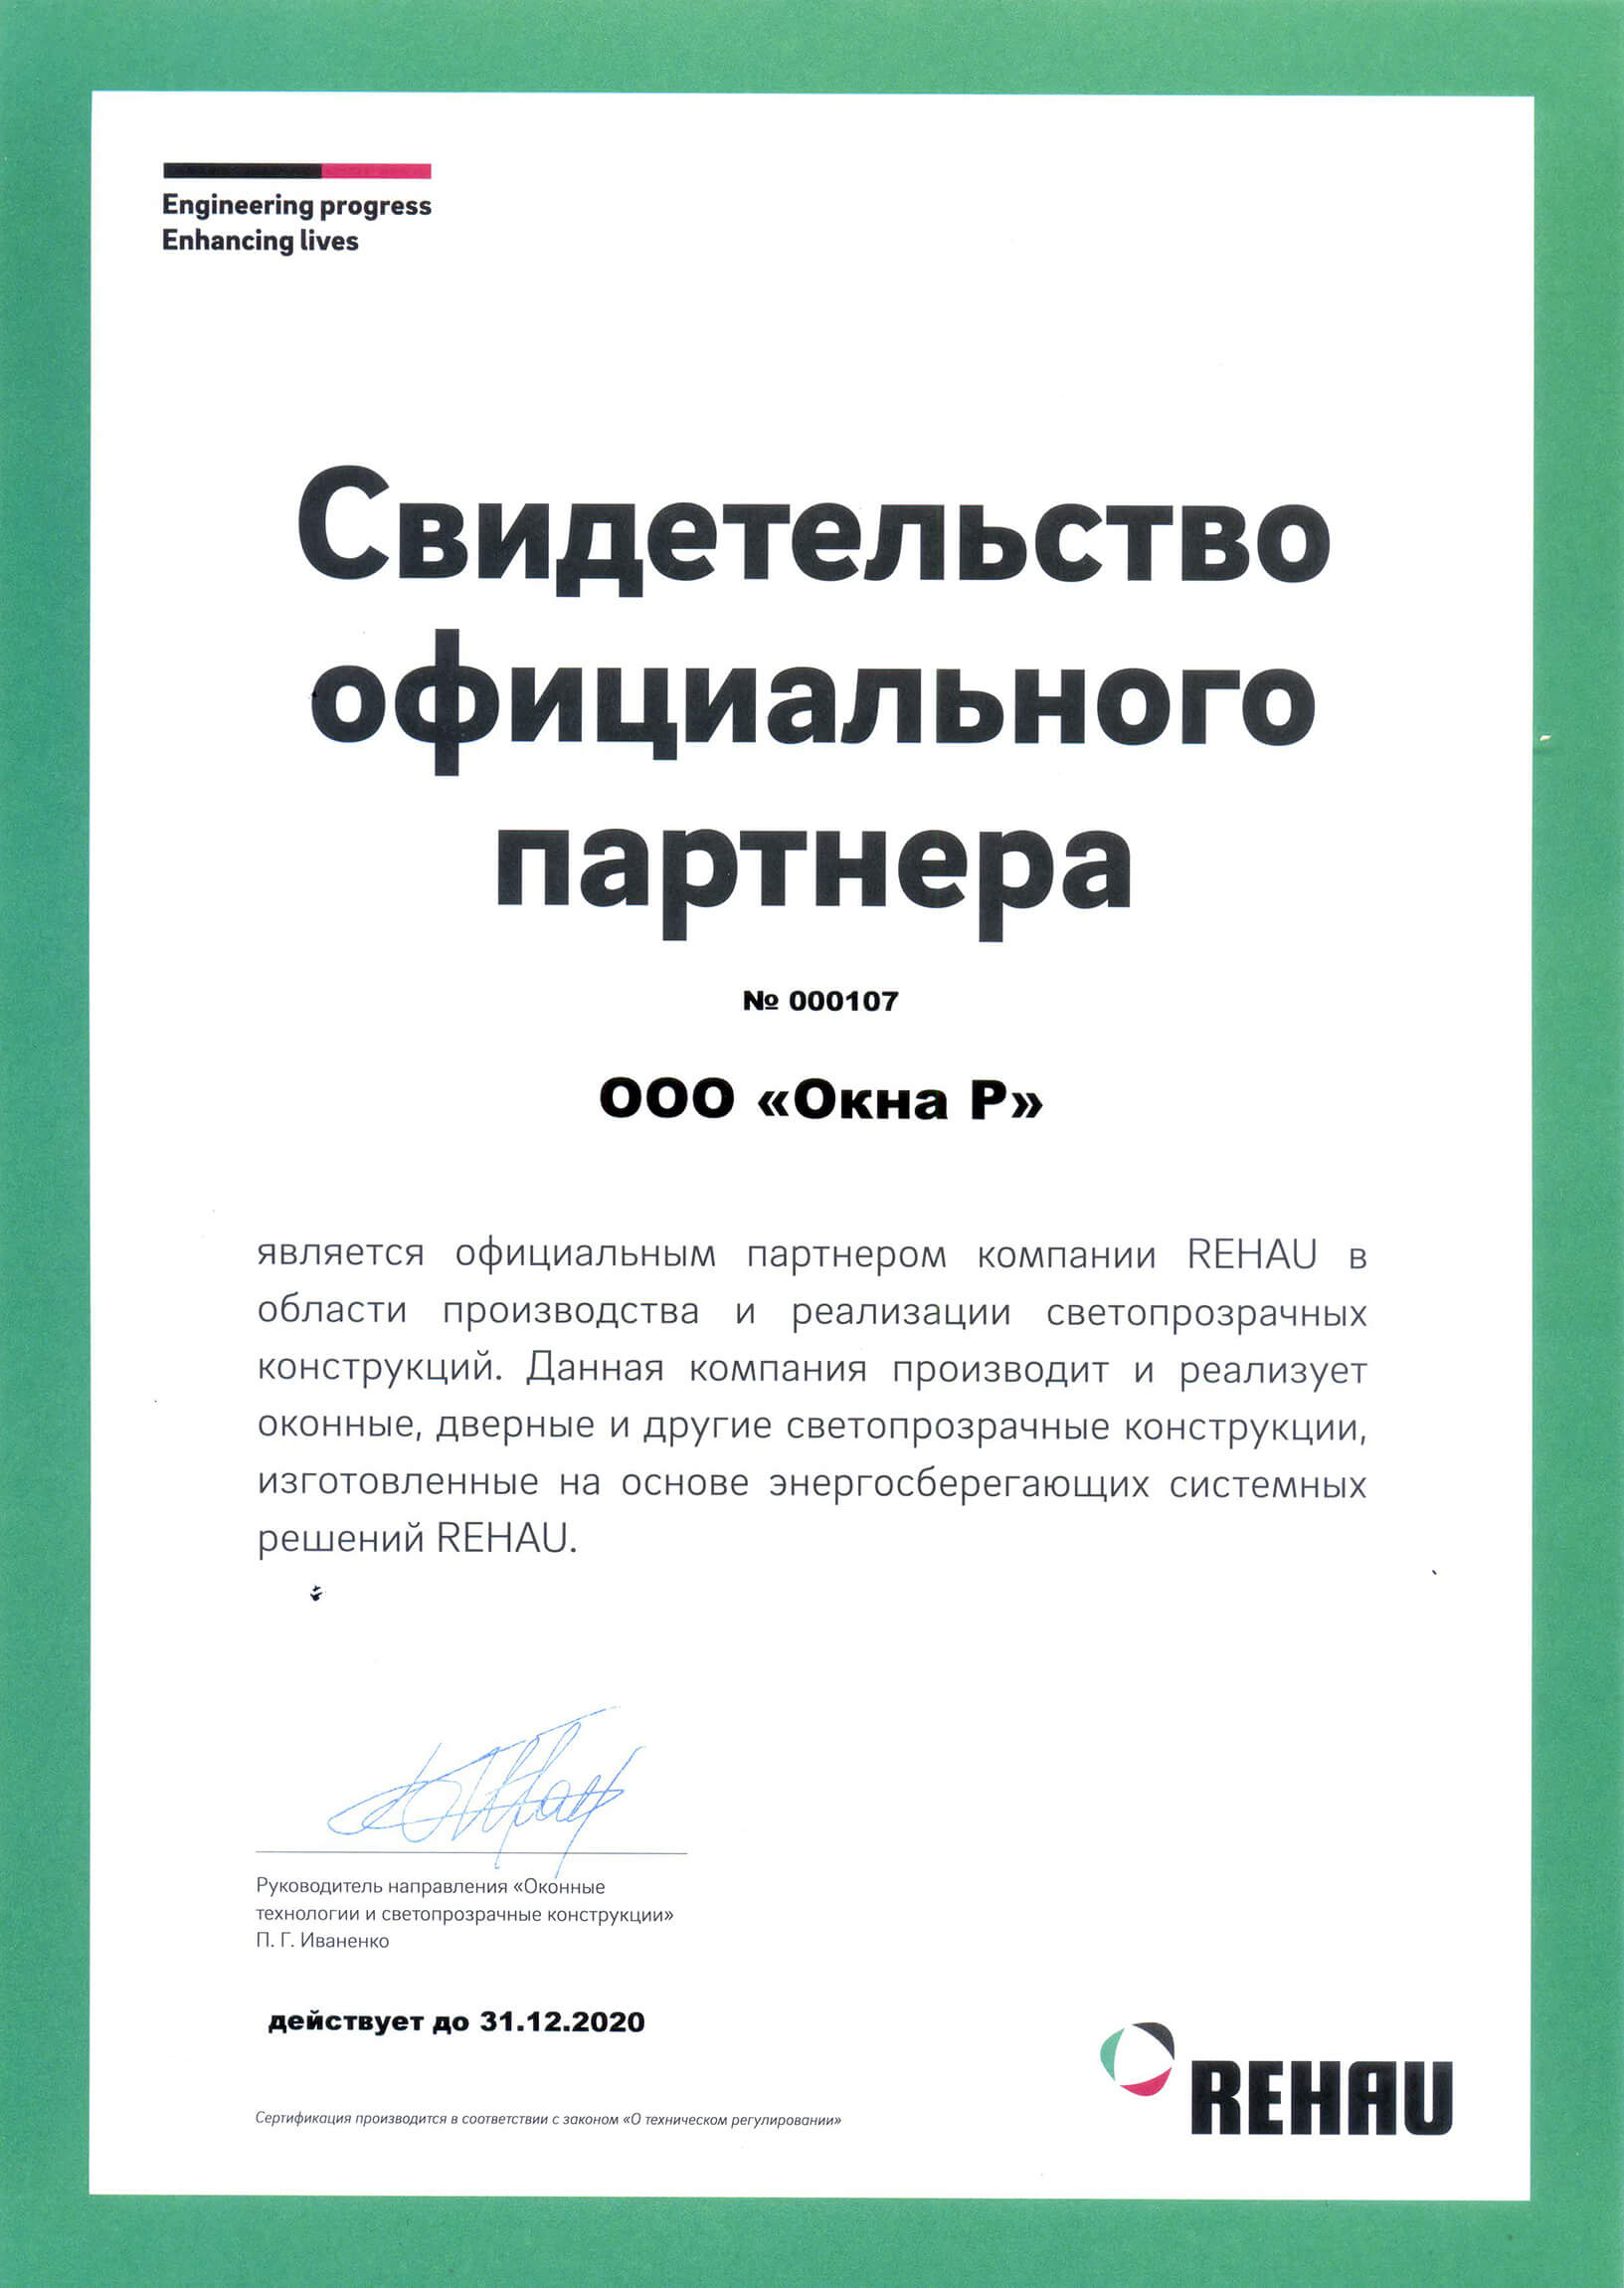 Сертификат rehau 2018